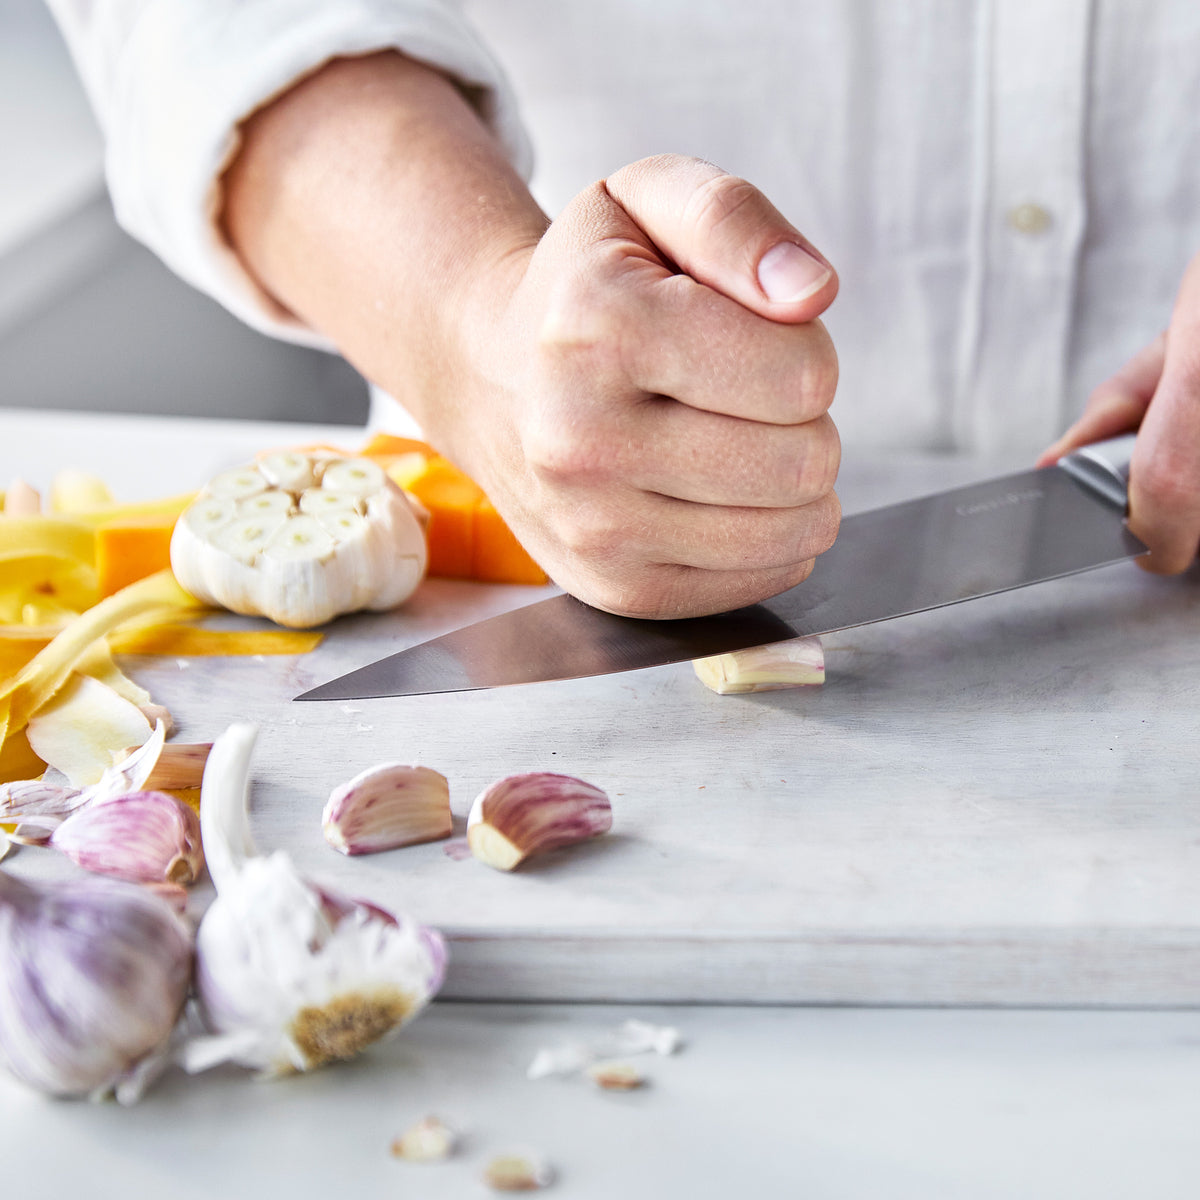 Greenpan Kitchen Knives & Cutlery